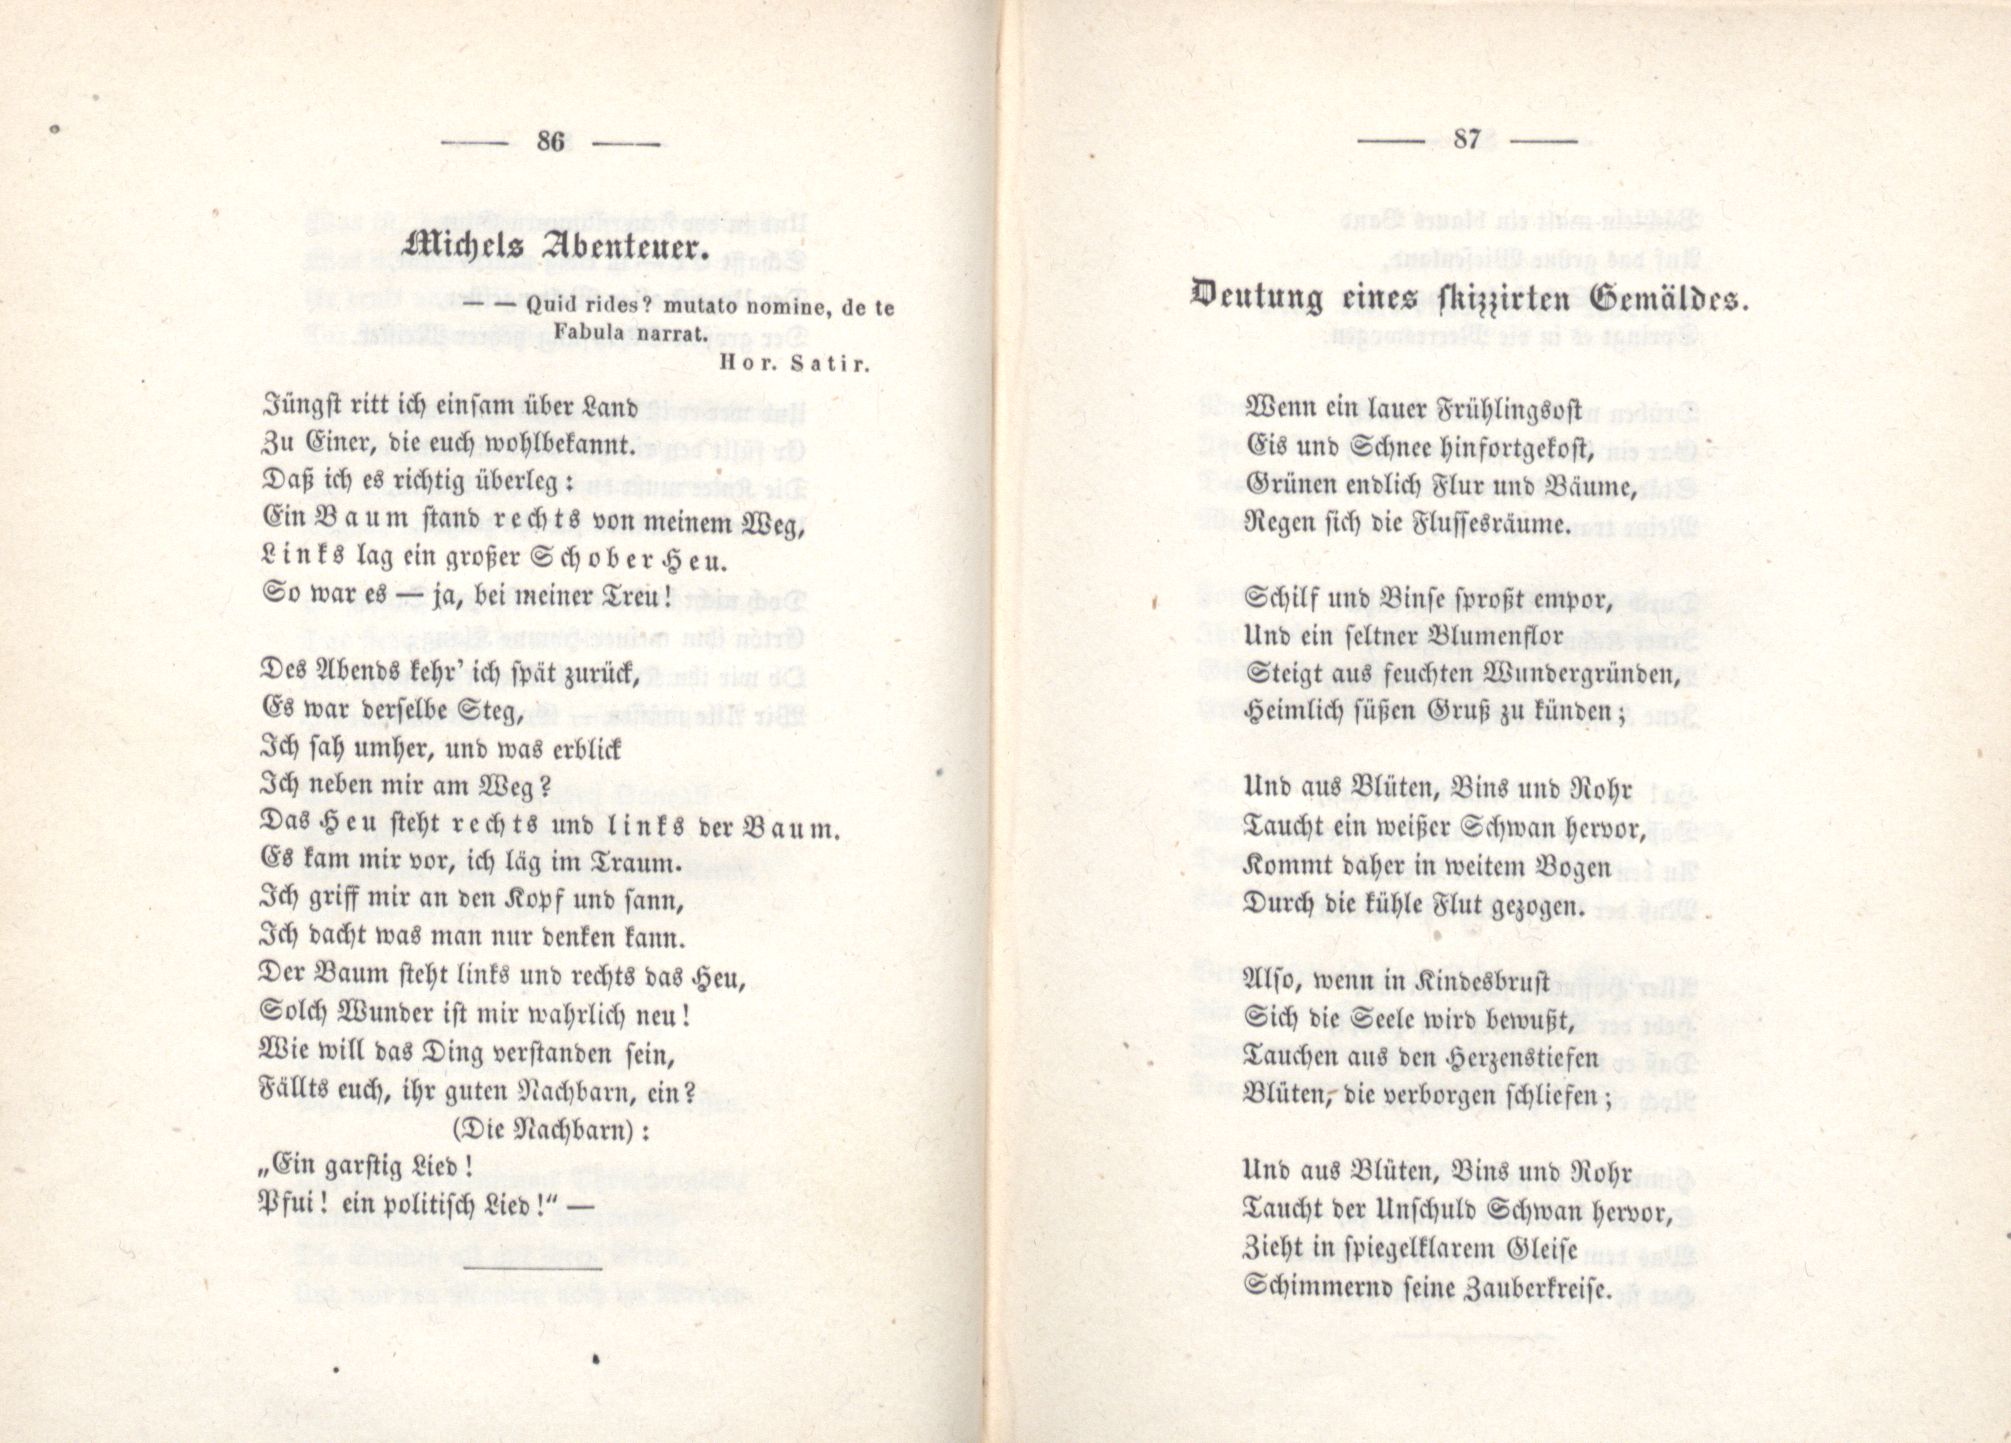 Michels Abenteuer (1853) | 1. (86-87) Main body of text